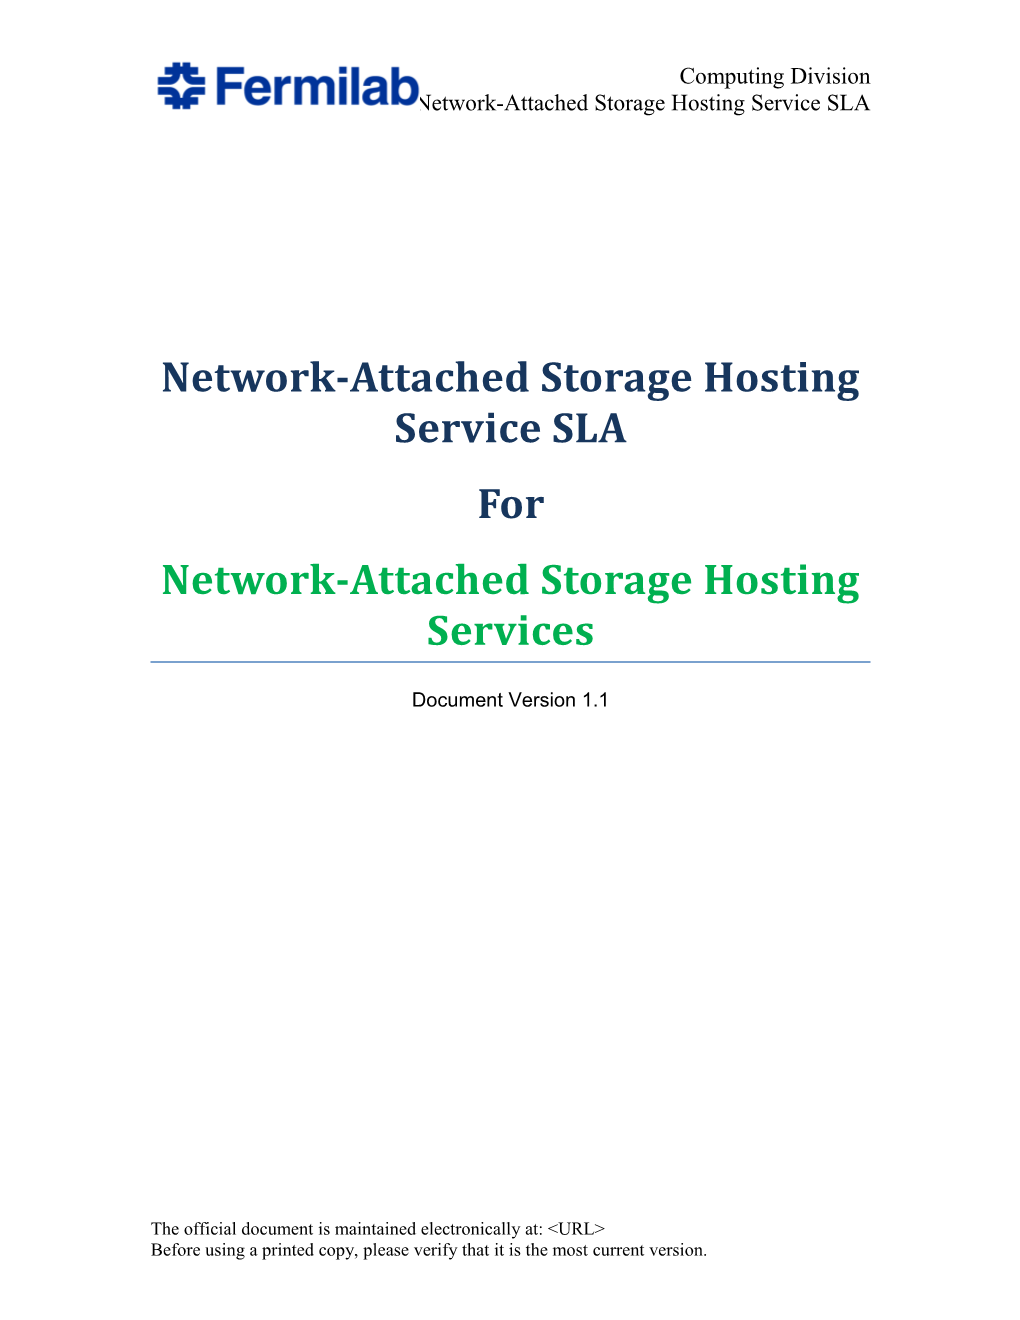 Network-Attached Storage Hosting Service SLA